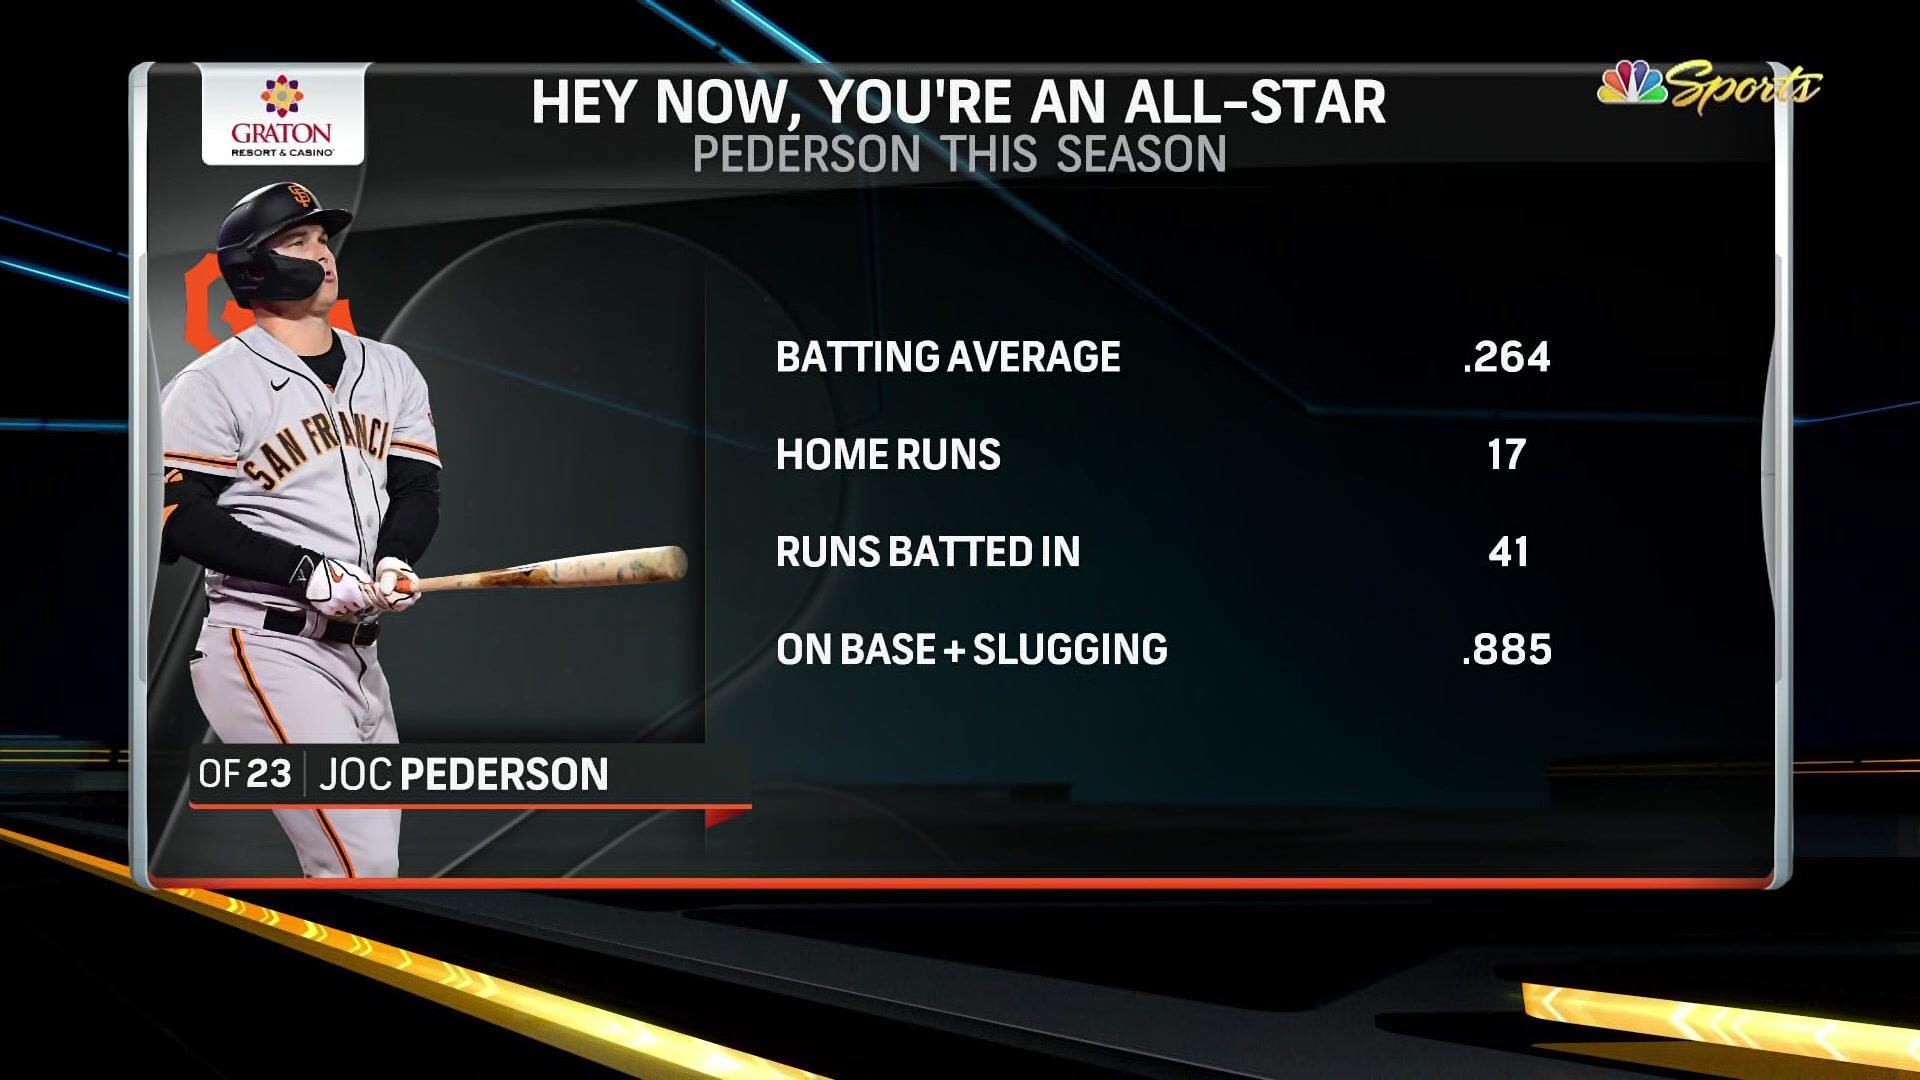 Joc Pederson named starting outfielder for All-Star Game 2022